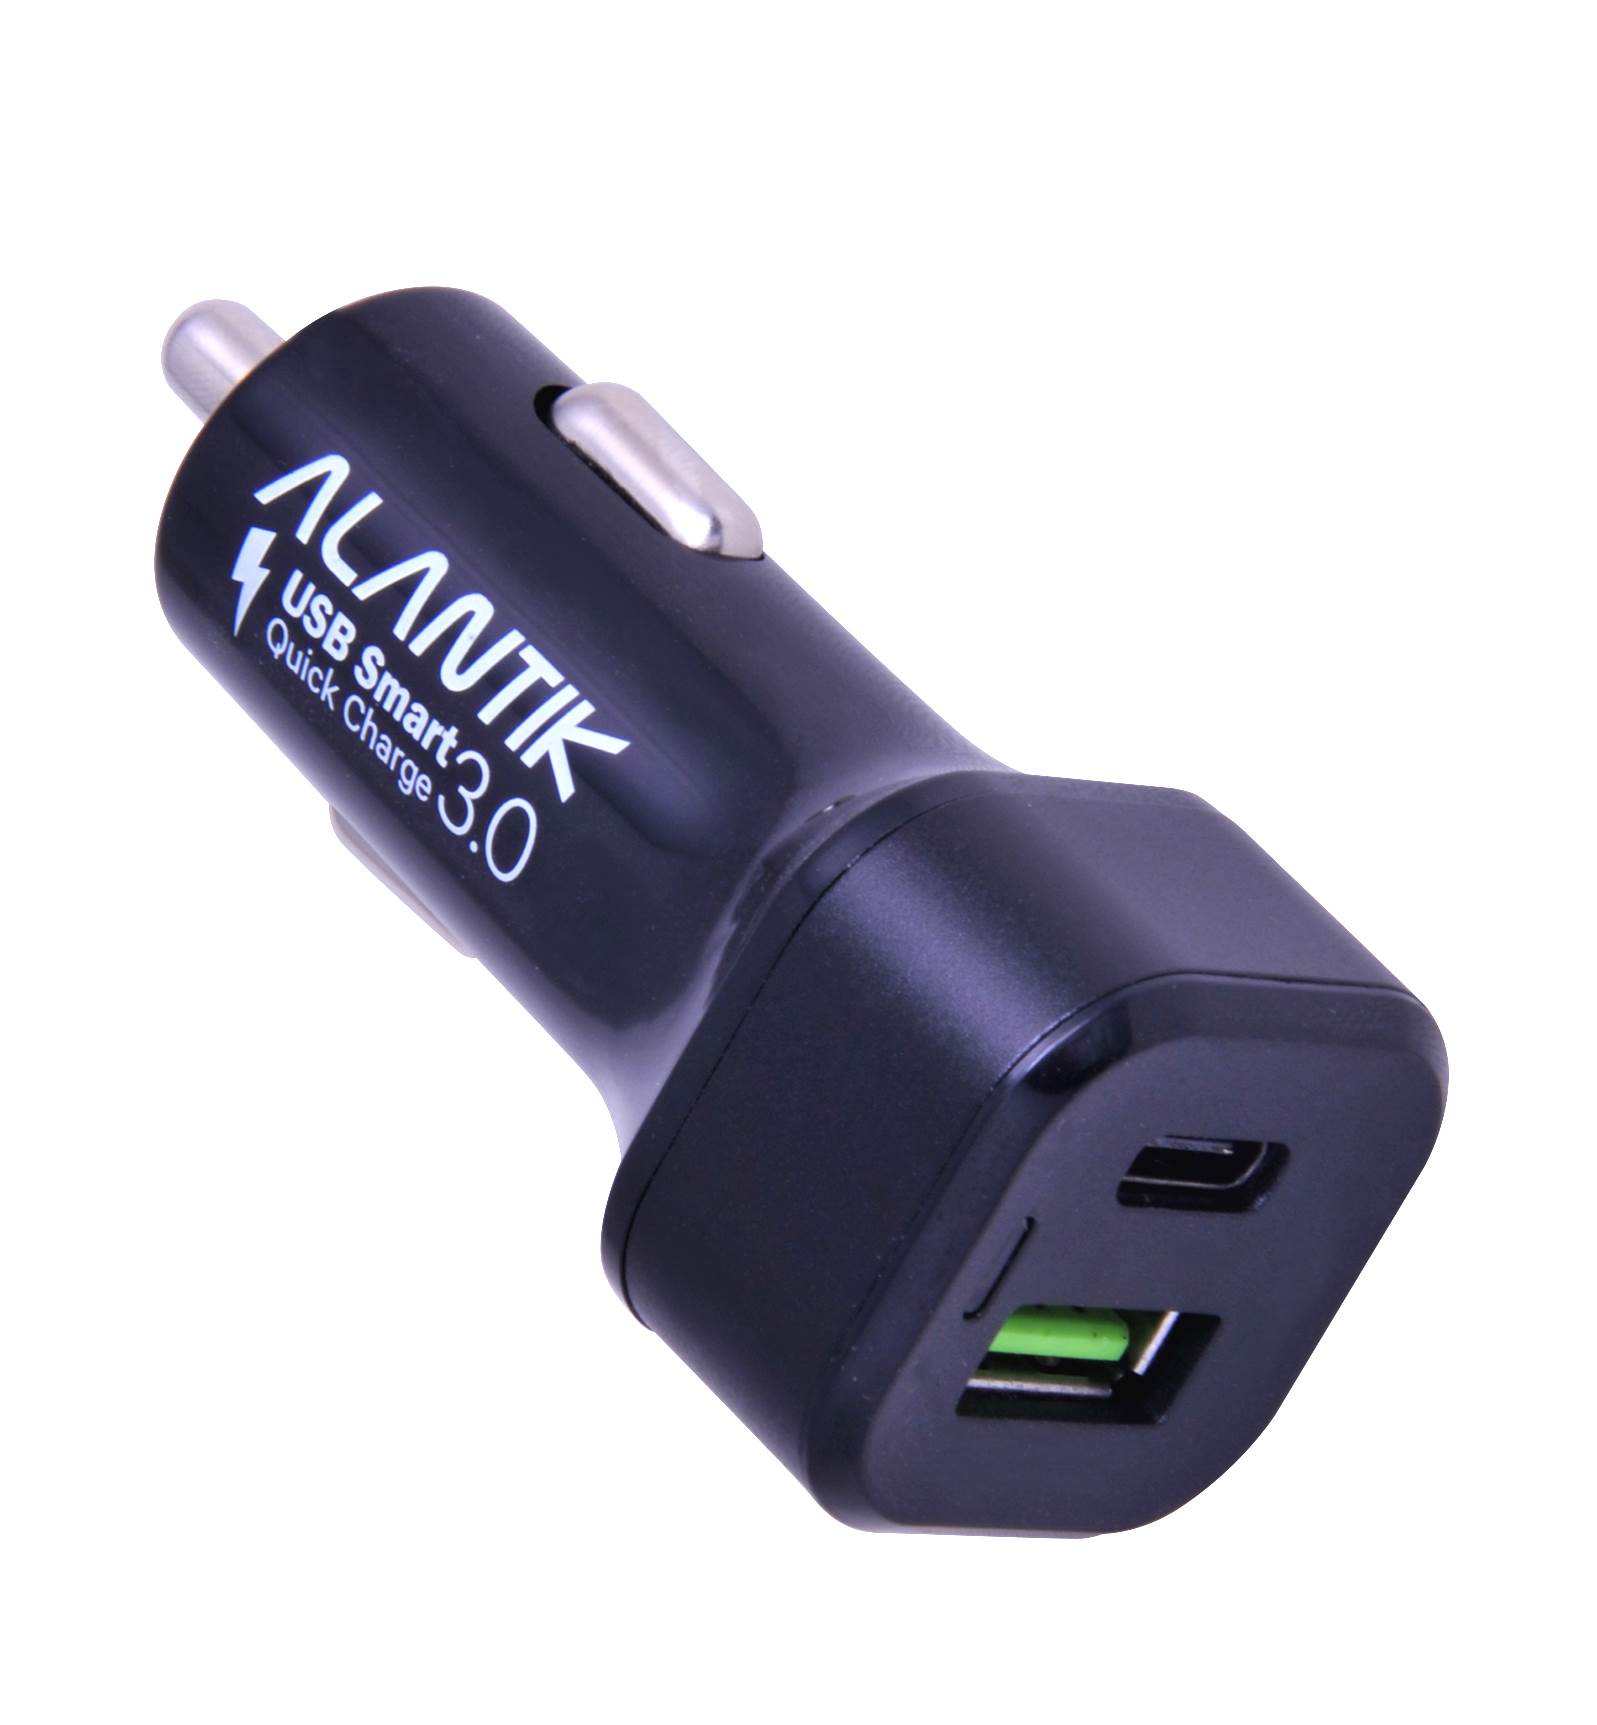 ALANTIK CAR CHARGER 1 USB fast + 1 USB TYPE-C